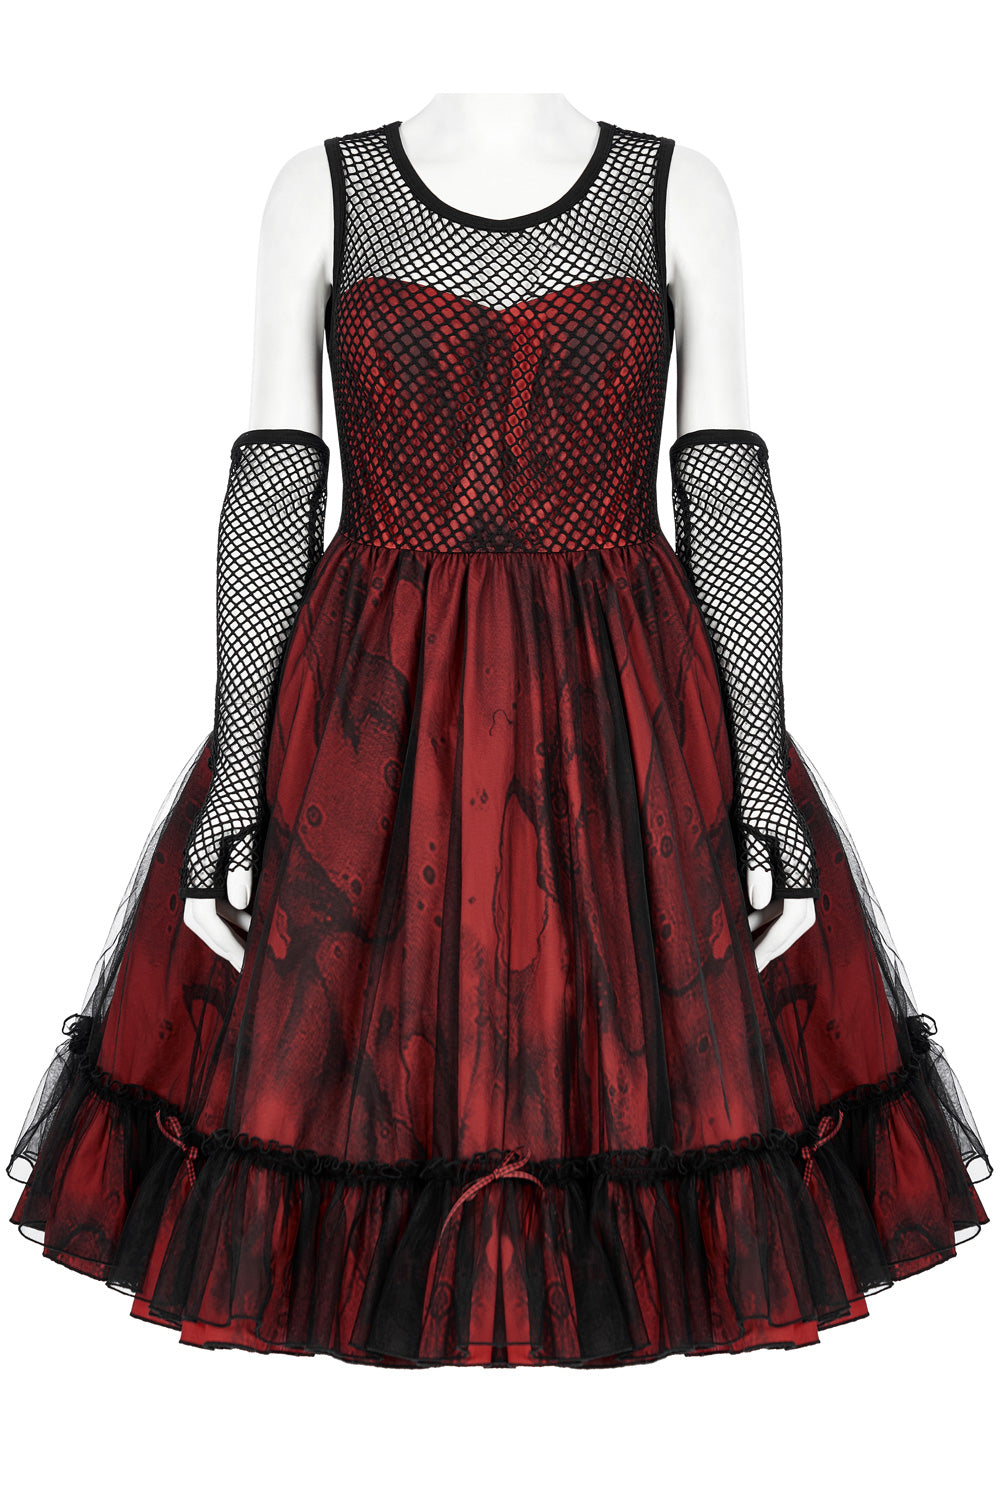 Bleeding Baby Doll Dress Set [RED/BLACK]